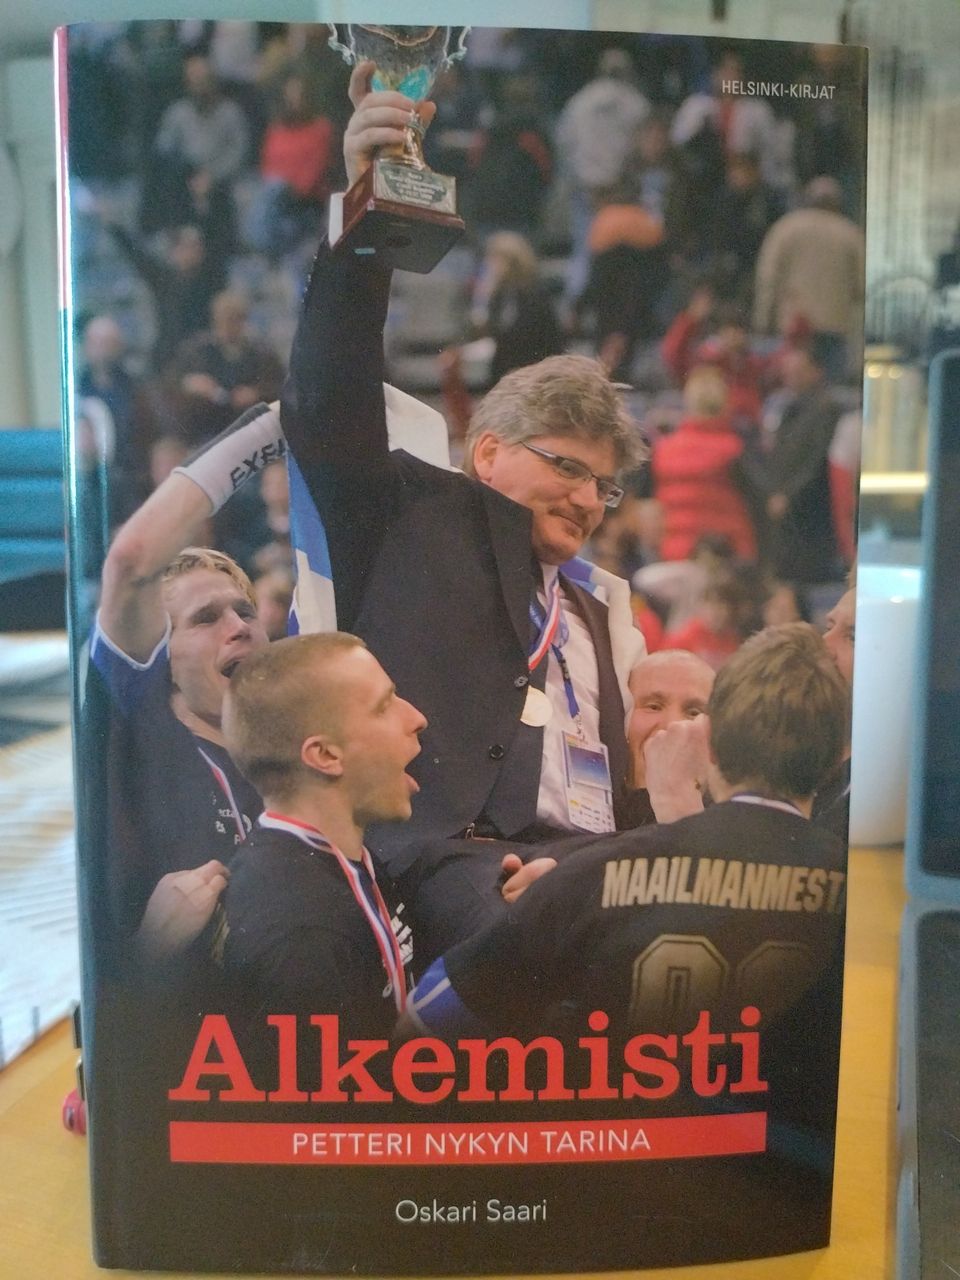 Alkemisti - Petteri Nykyn tarina